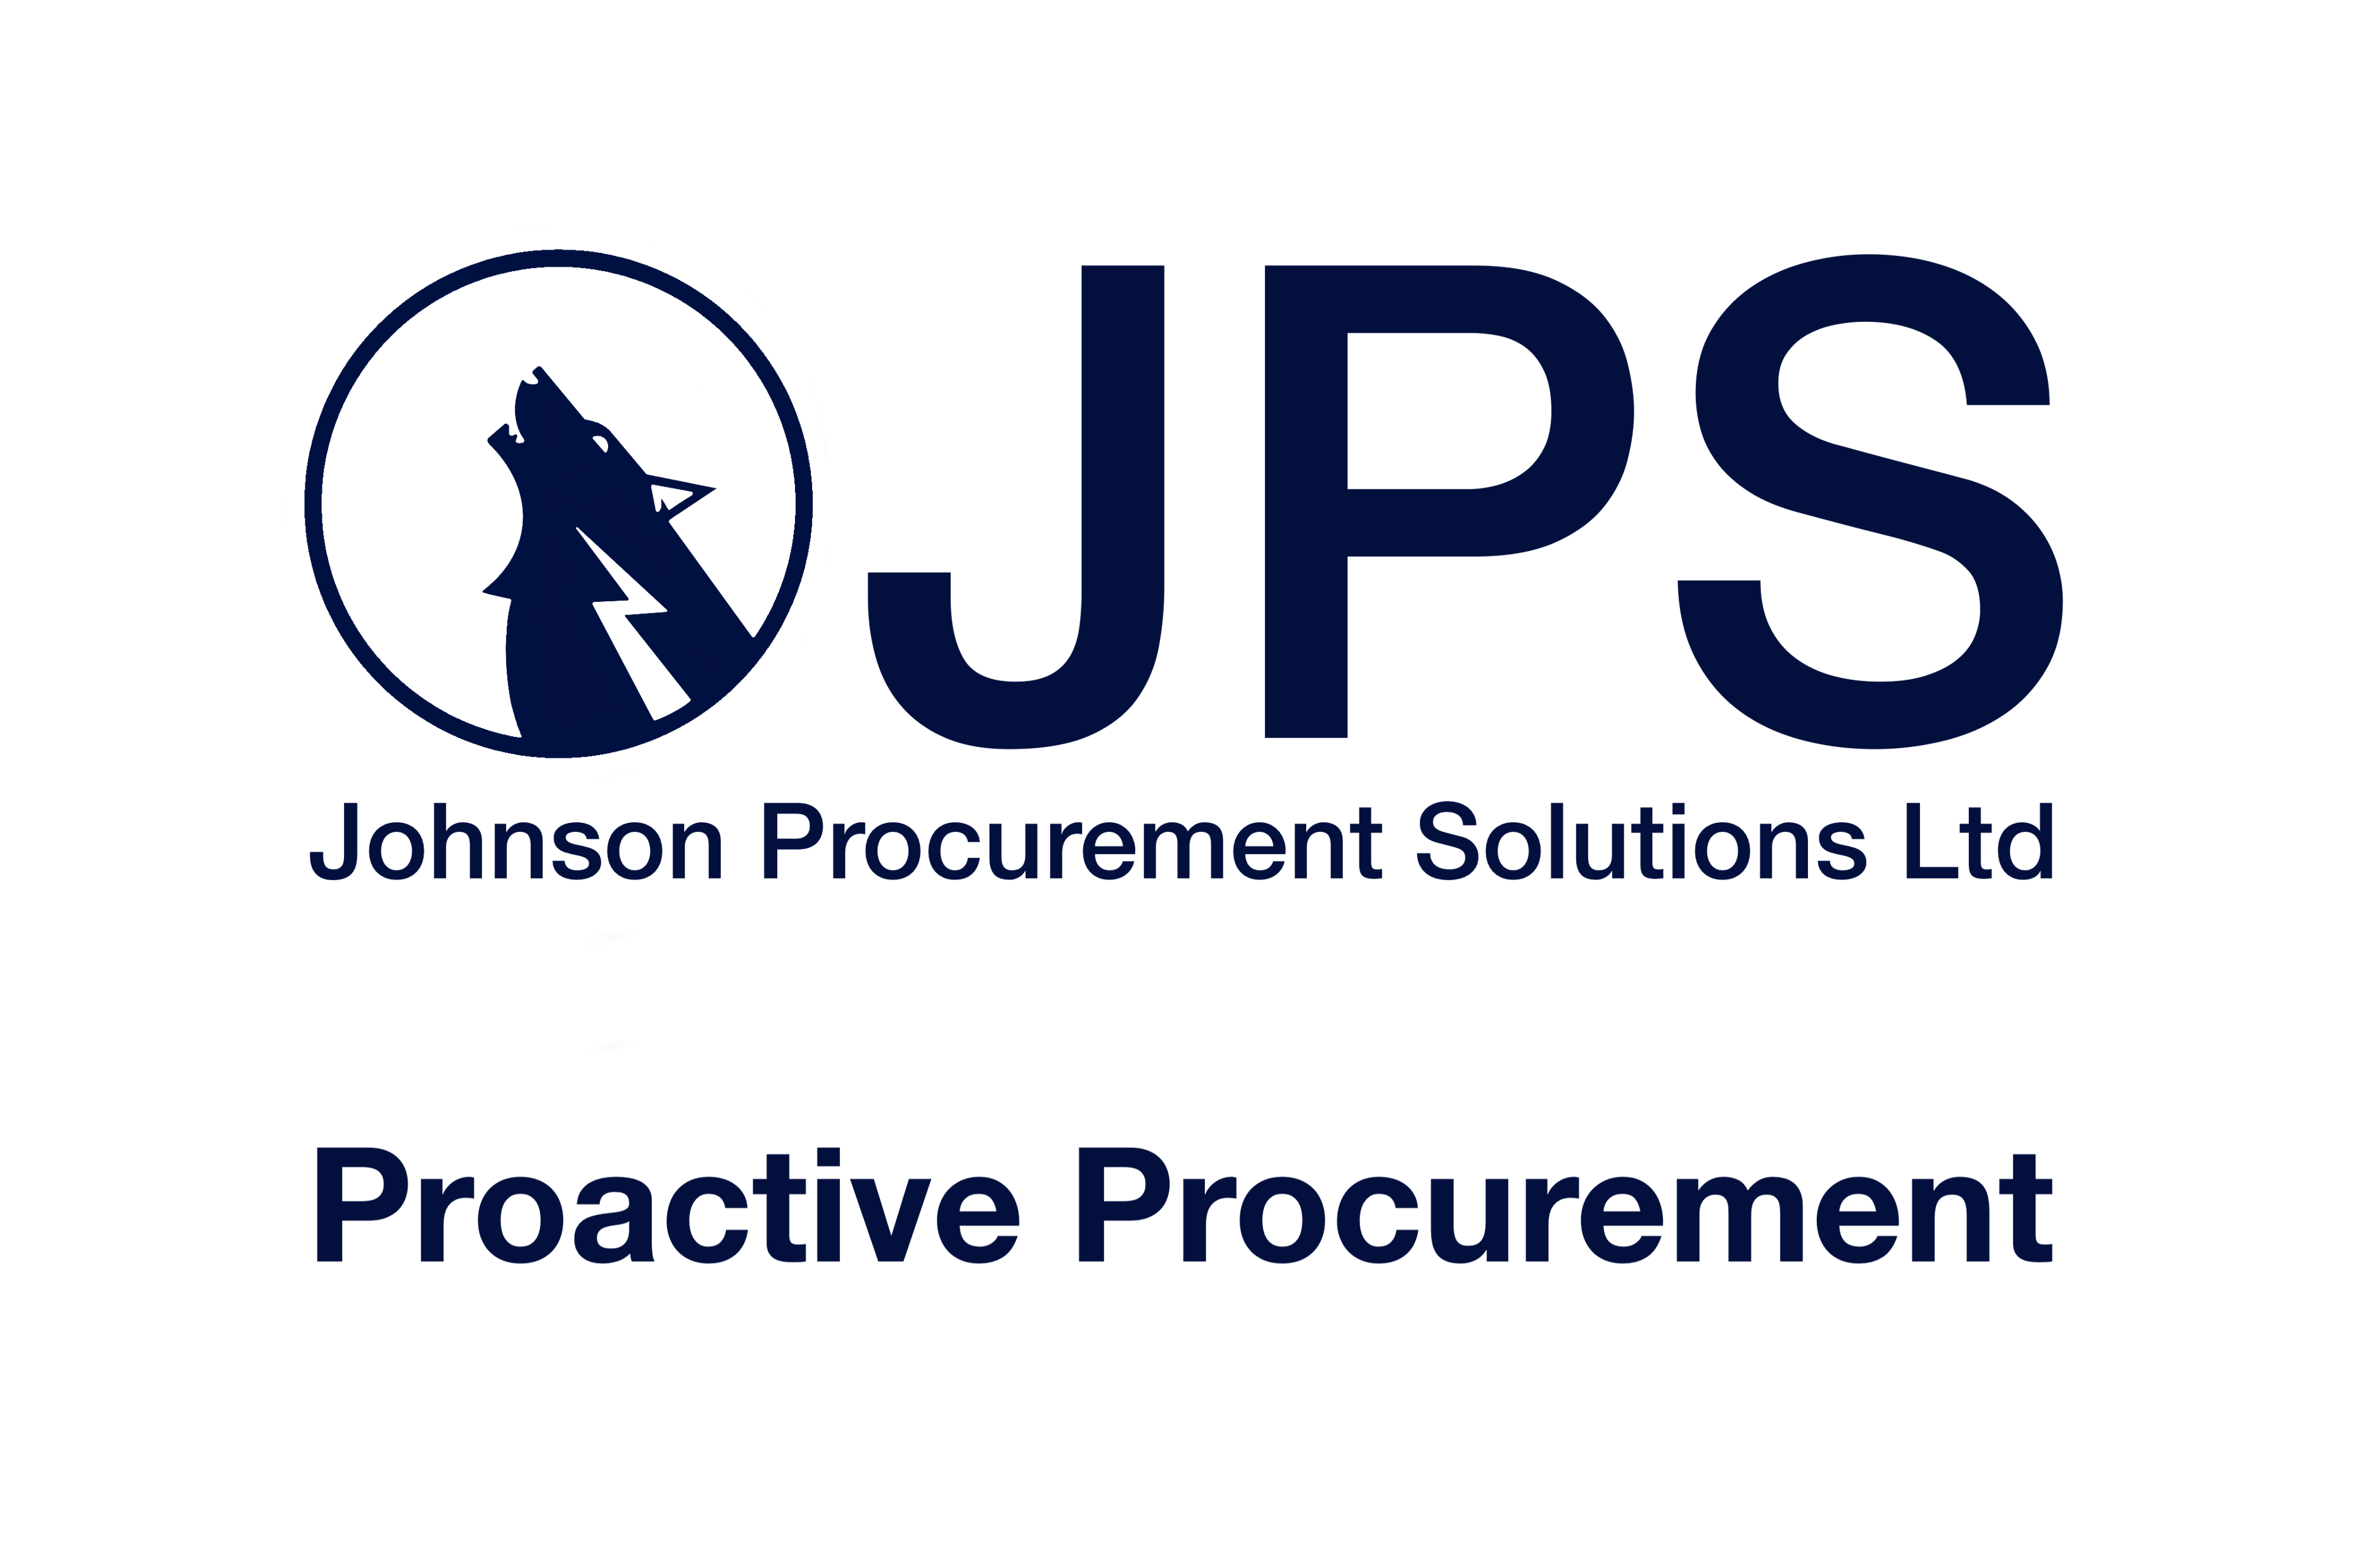 Johnson Procurement Solutions Limited